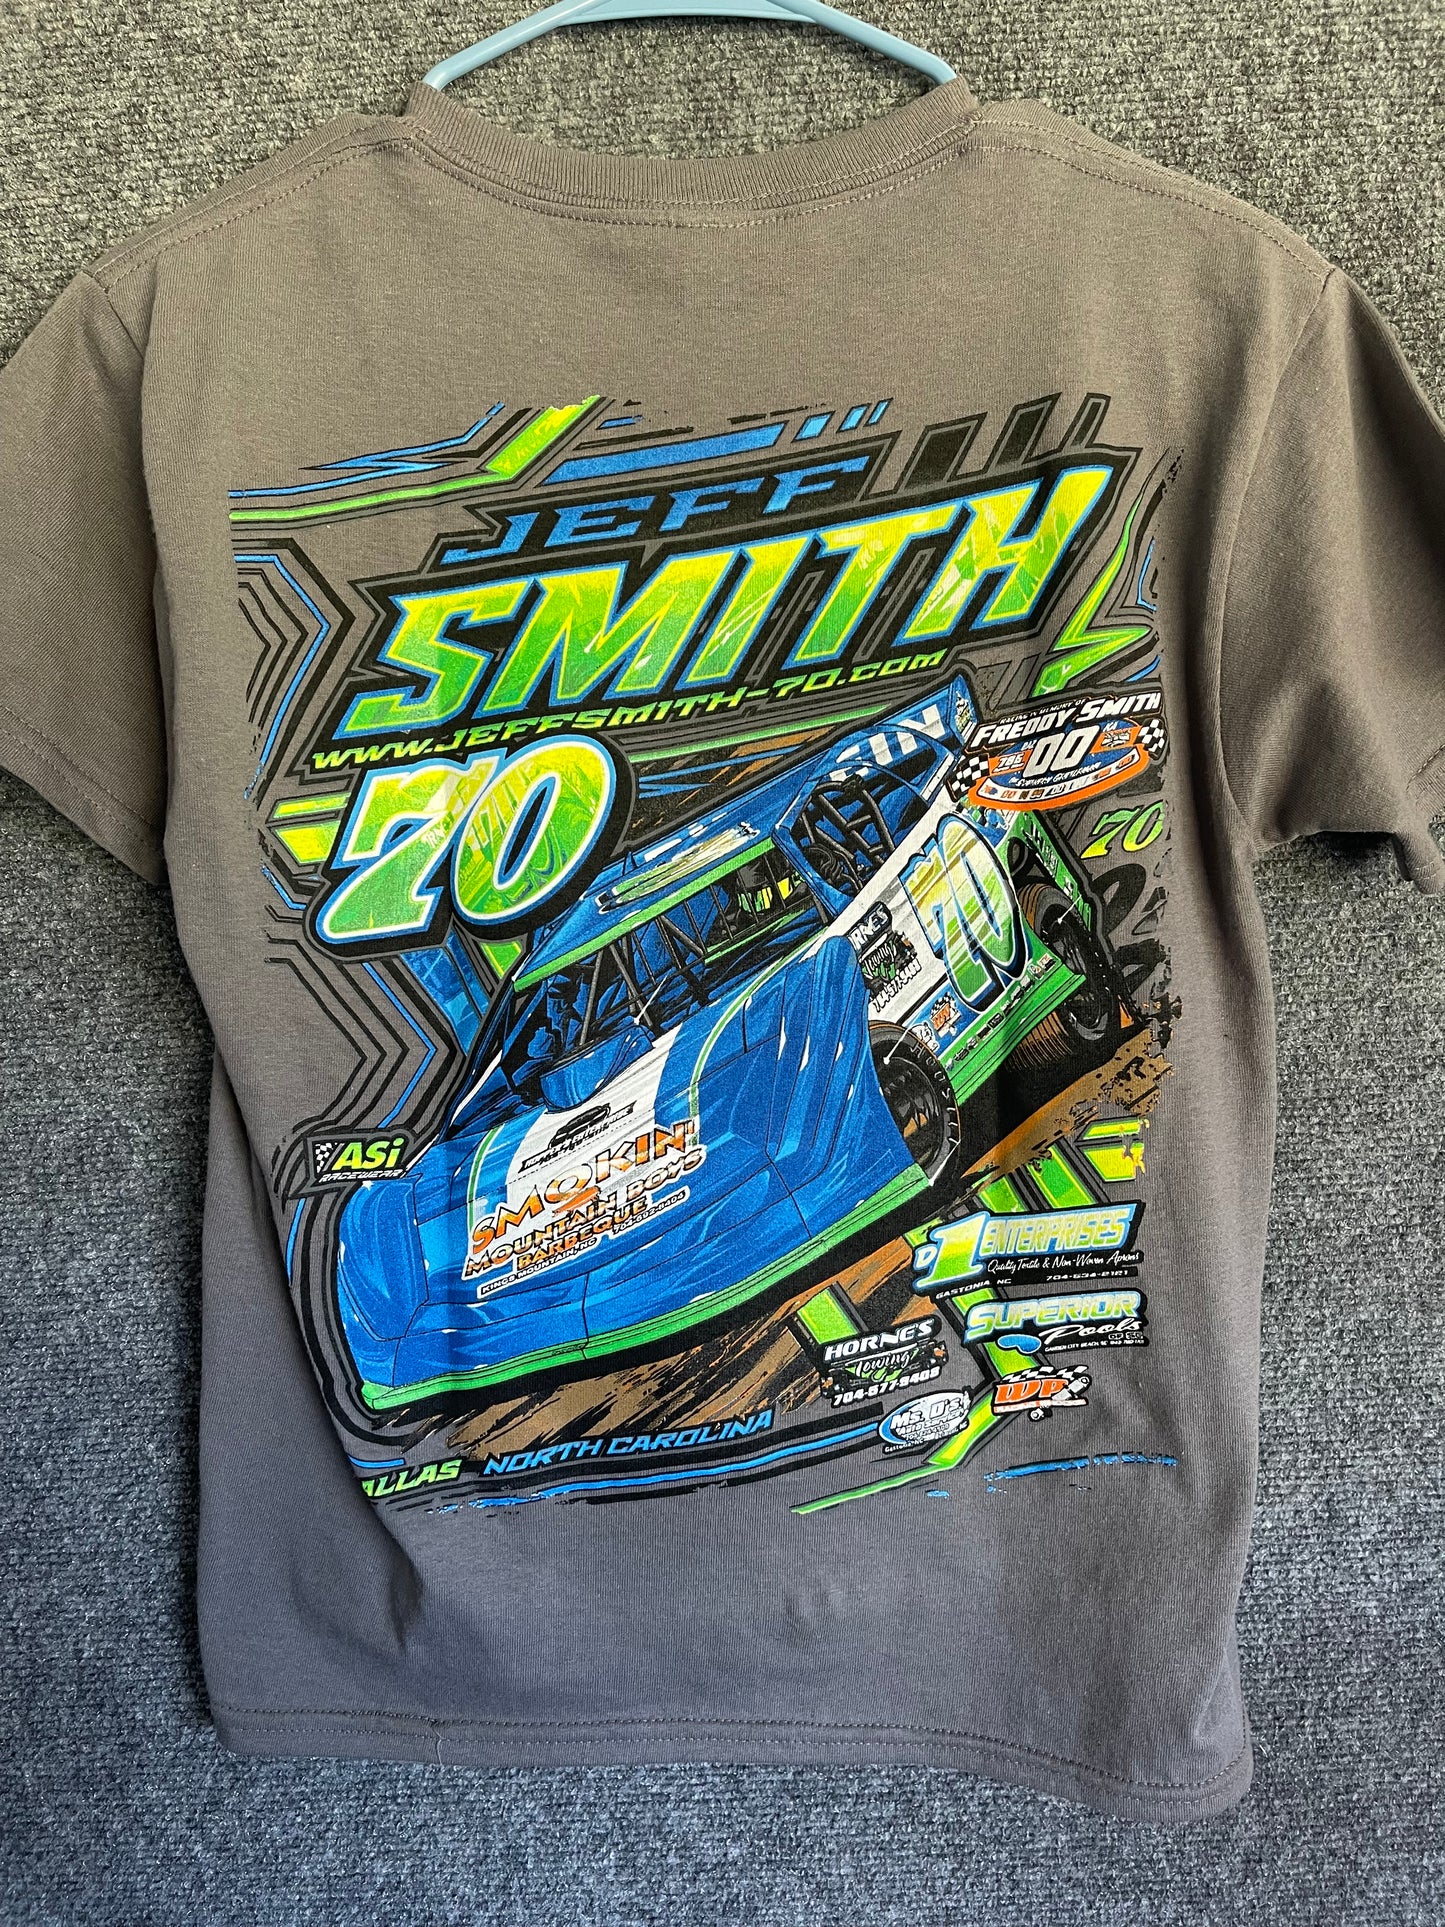 Jeff Smith 70 Shirt